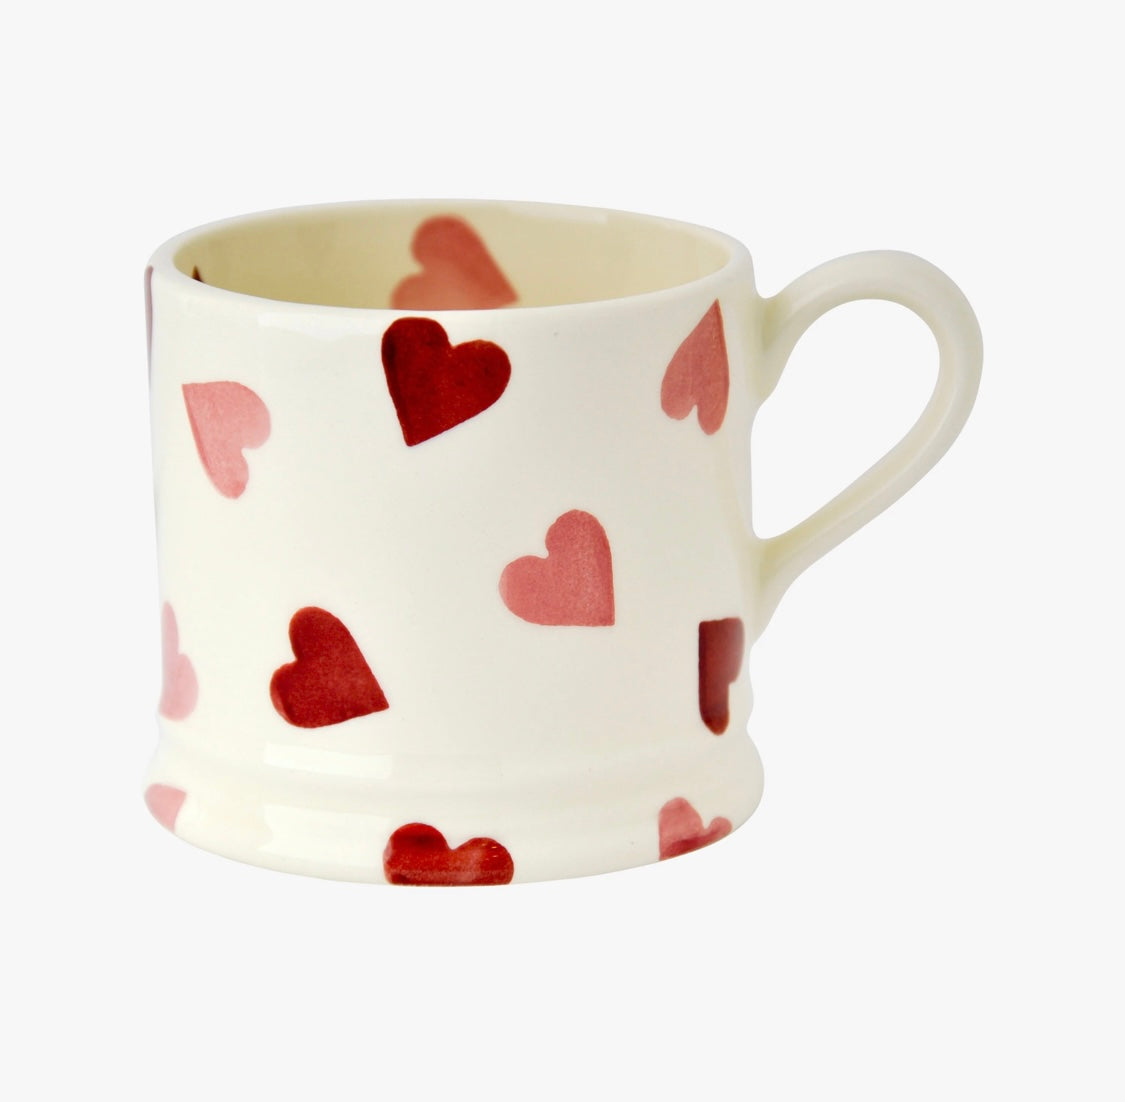 Emma Bridgewater Pink Hearts Small Mug 175ml